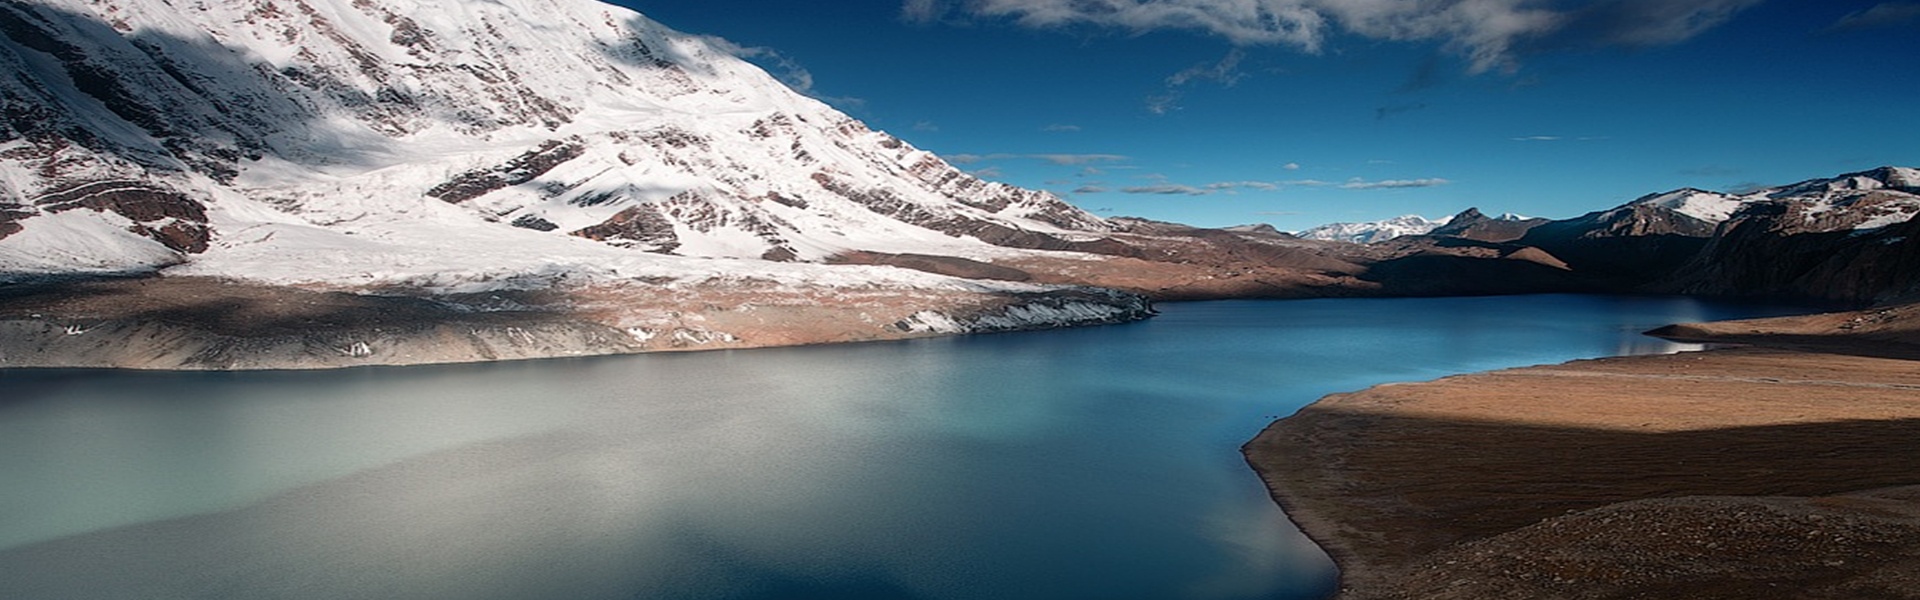 Annapurna circuit trek with Tilicho Lake  Banner